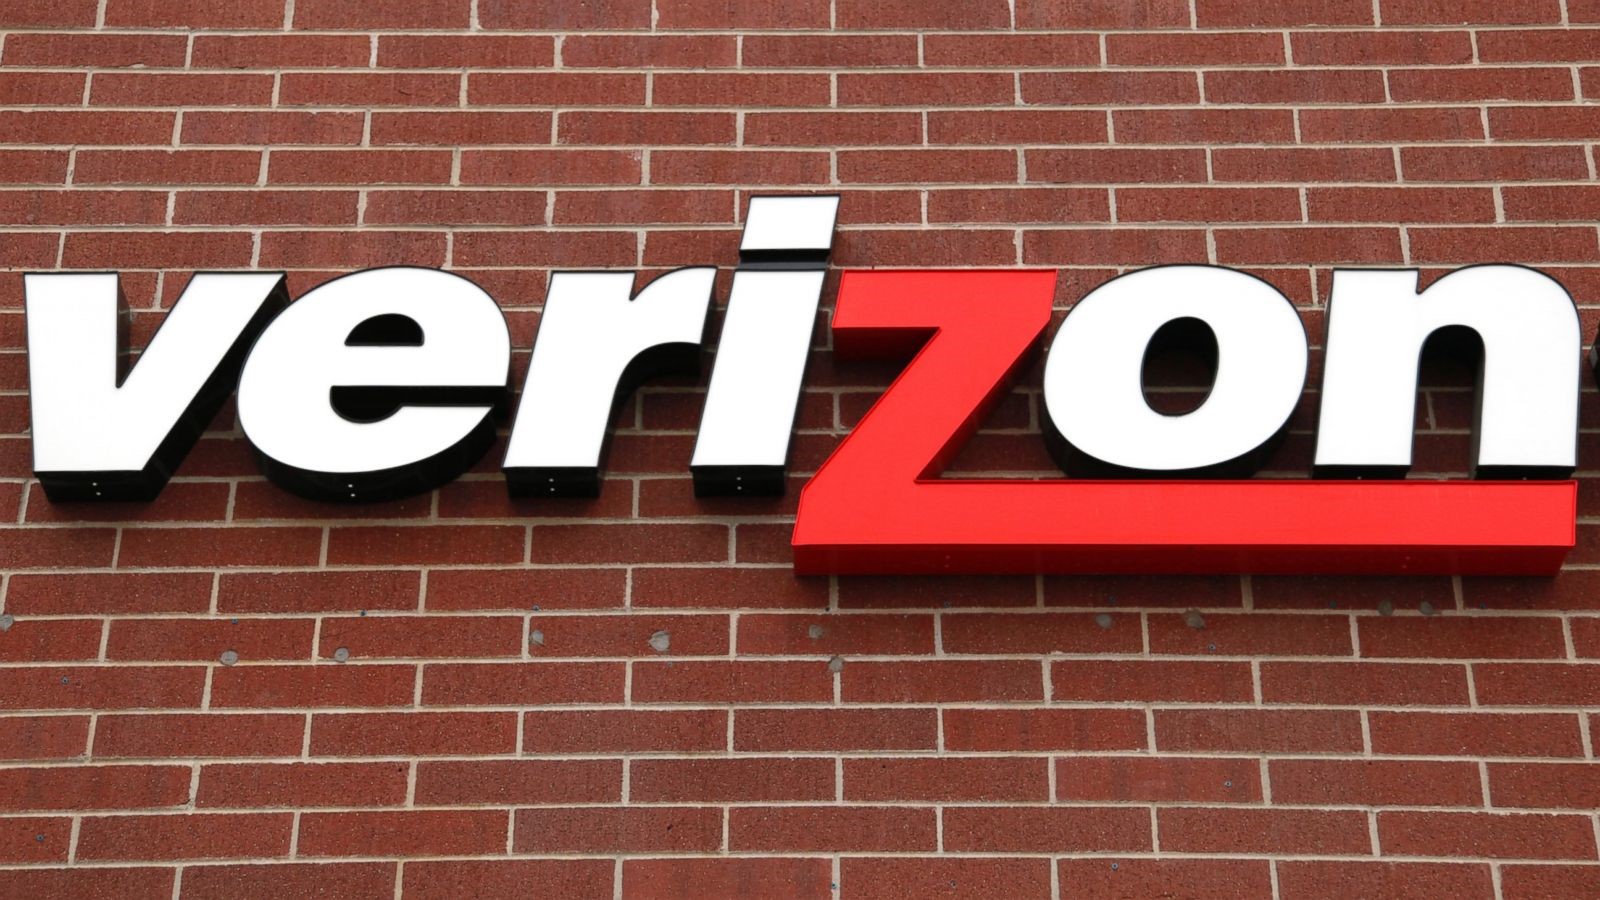 What states are eligible for the Lifeline discount program through Verizon?